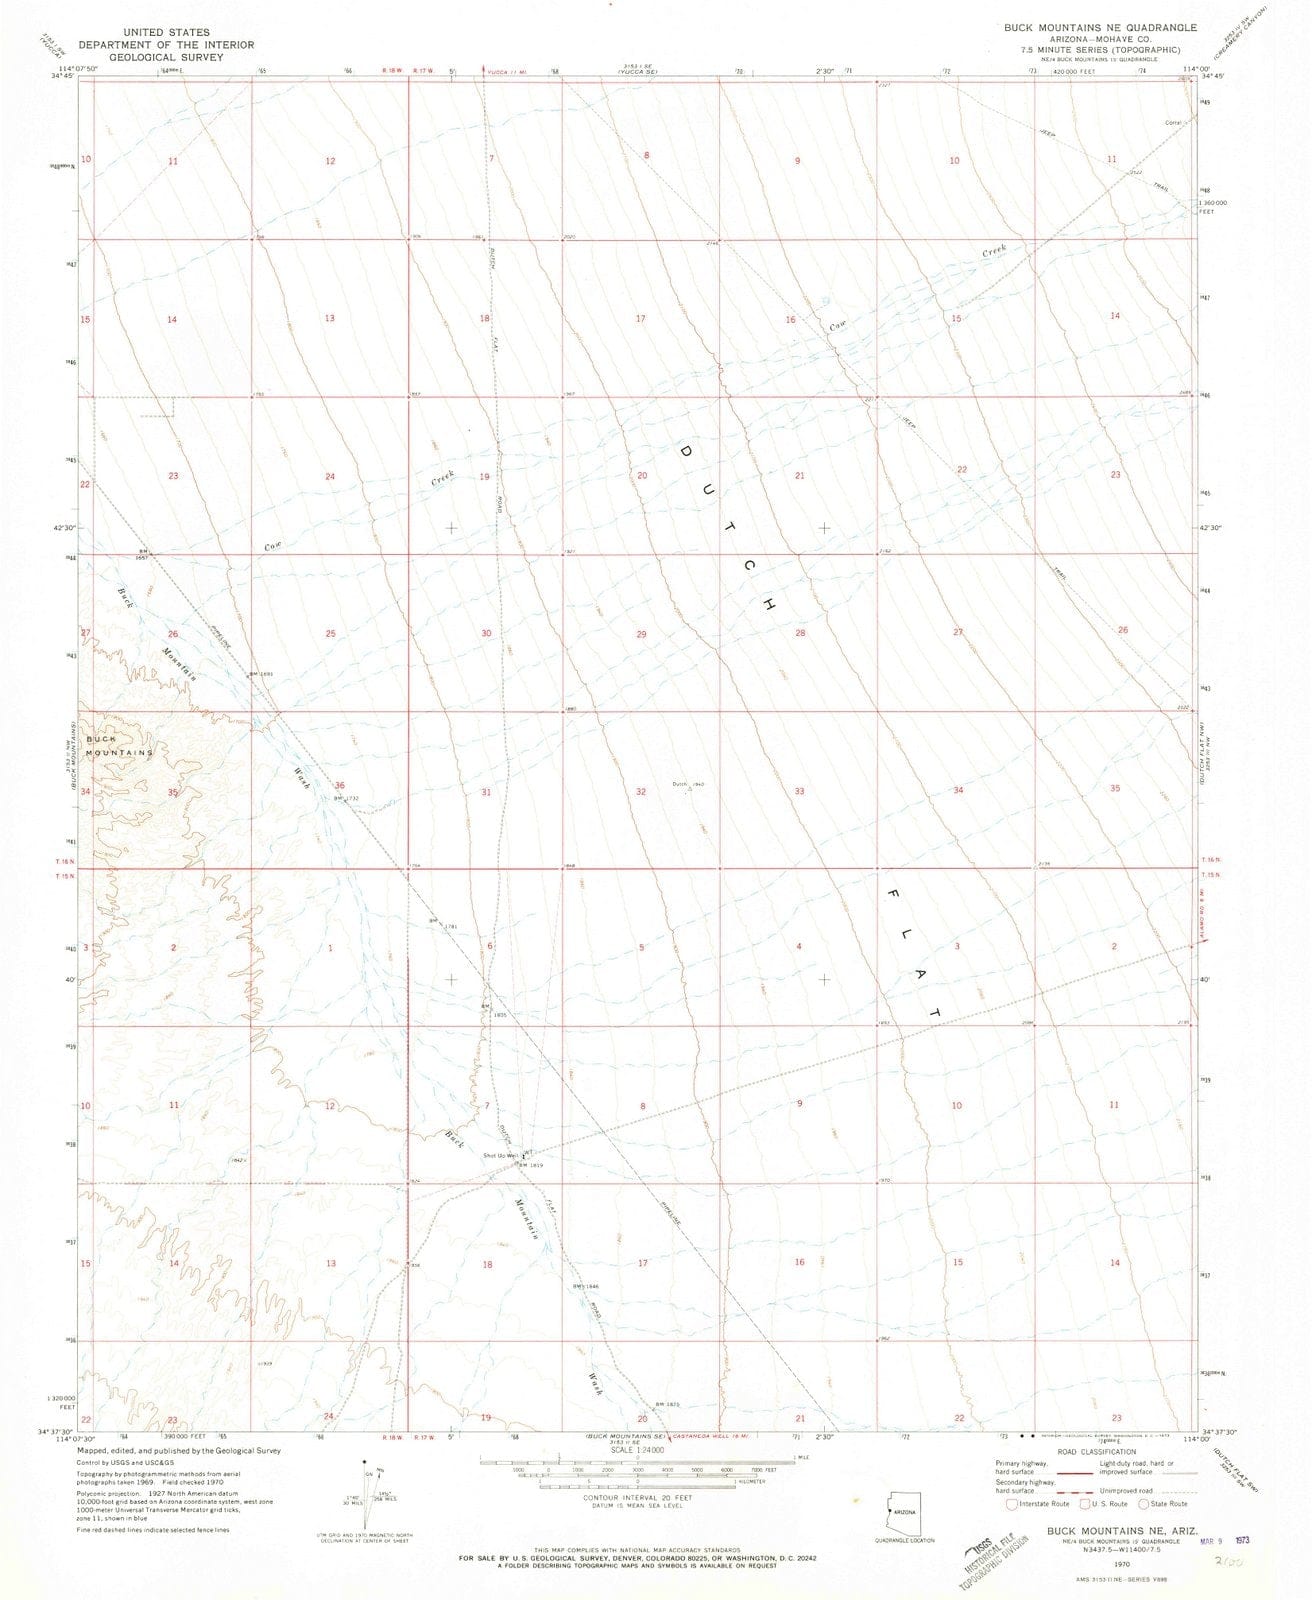 1970 Buck Mountains, AZ - Arizona - USGS Topographic Map